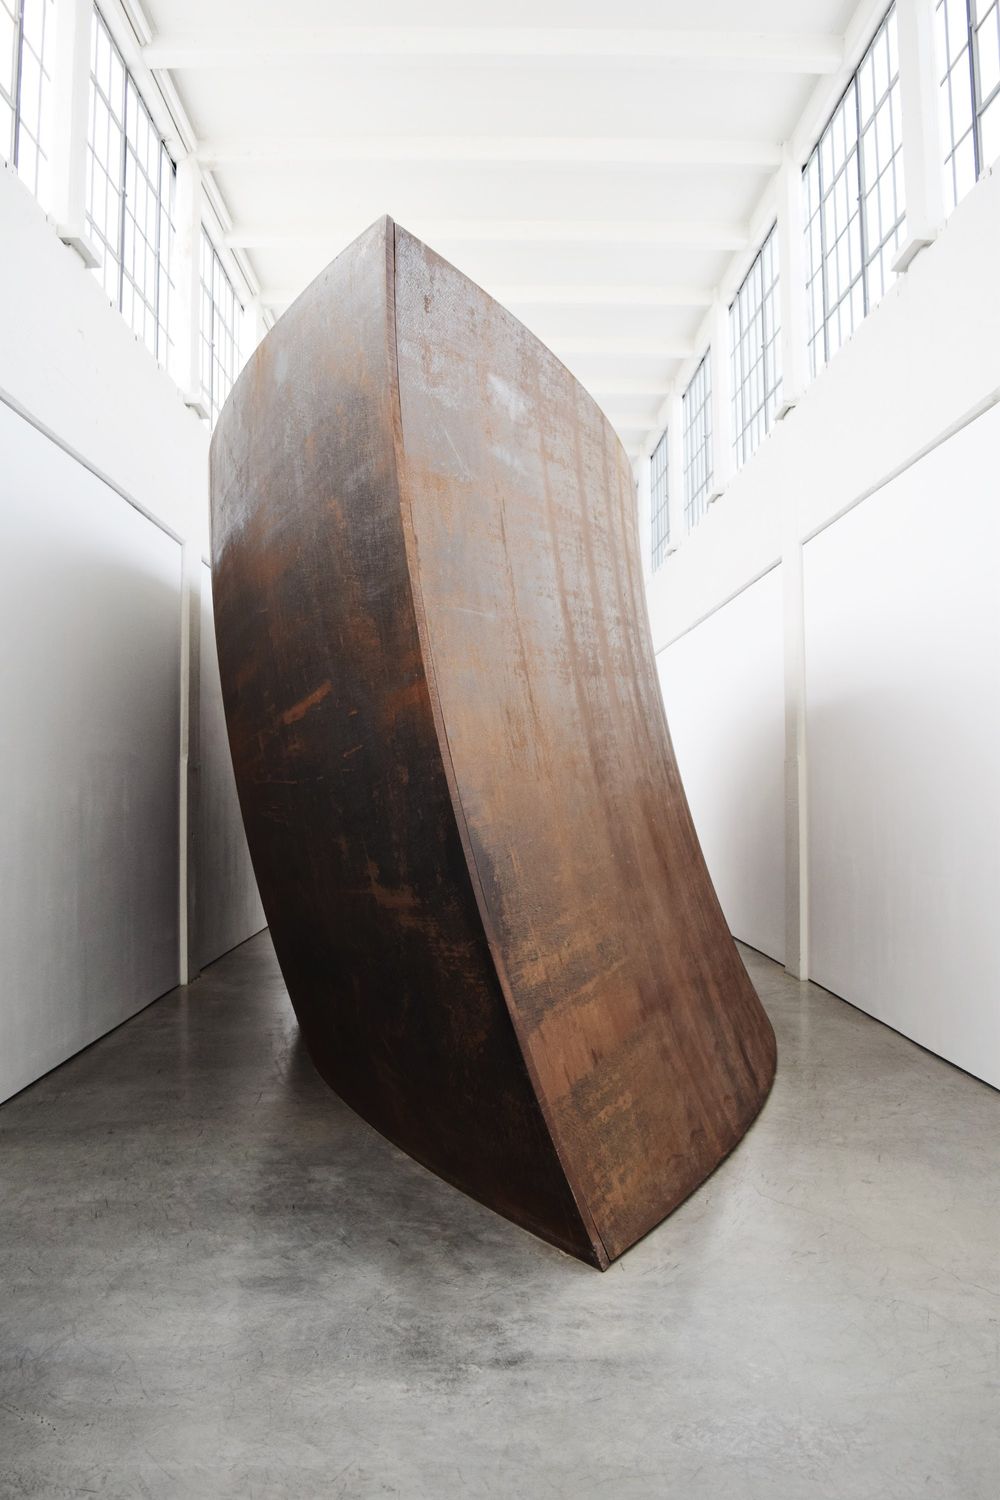 Richard Serra, Dia Beacon